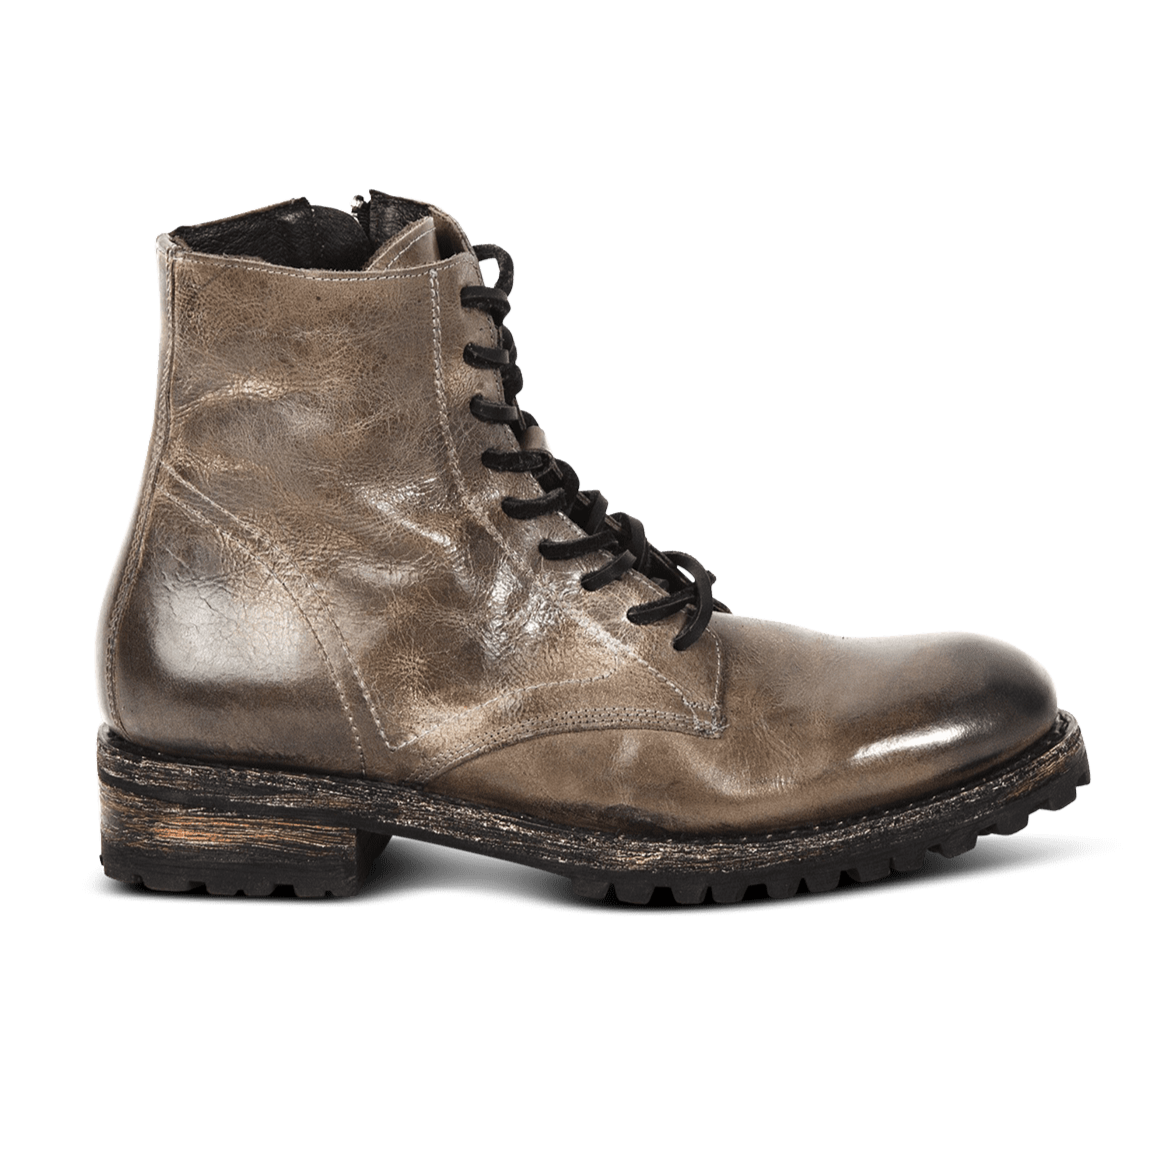 FREEBIRD men's Jax stone leather lace up workman style boot